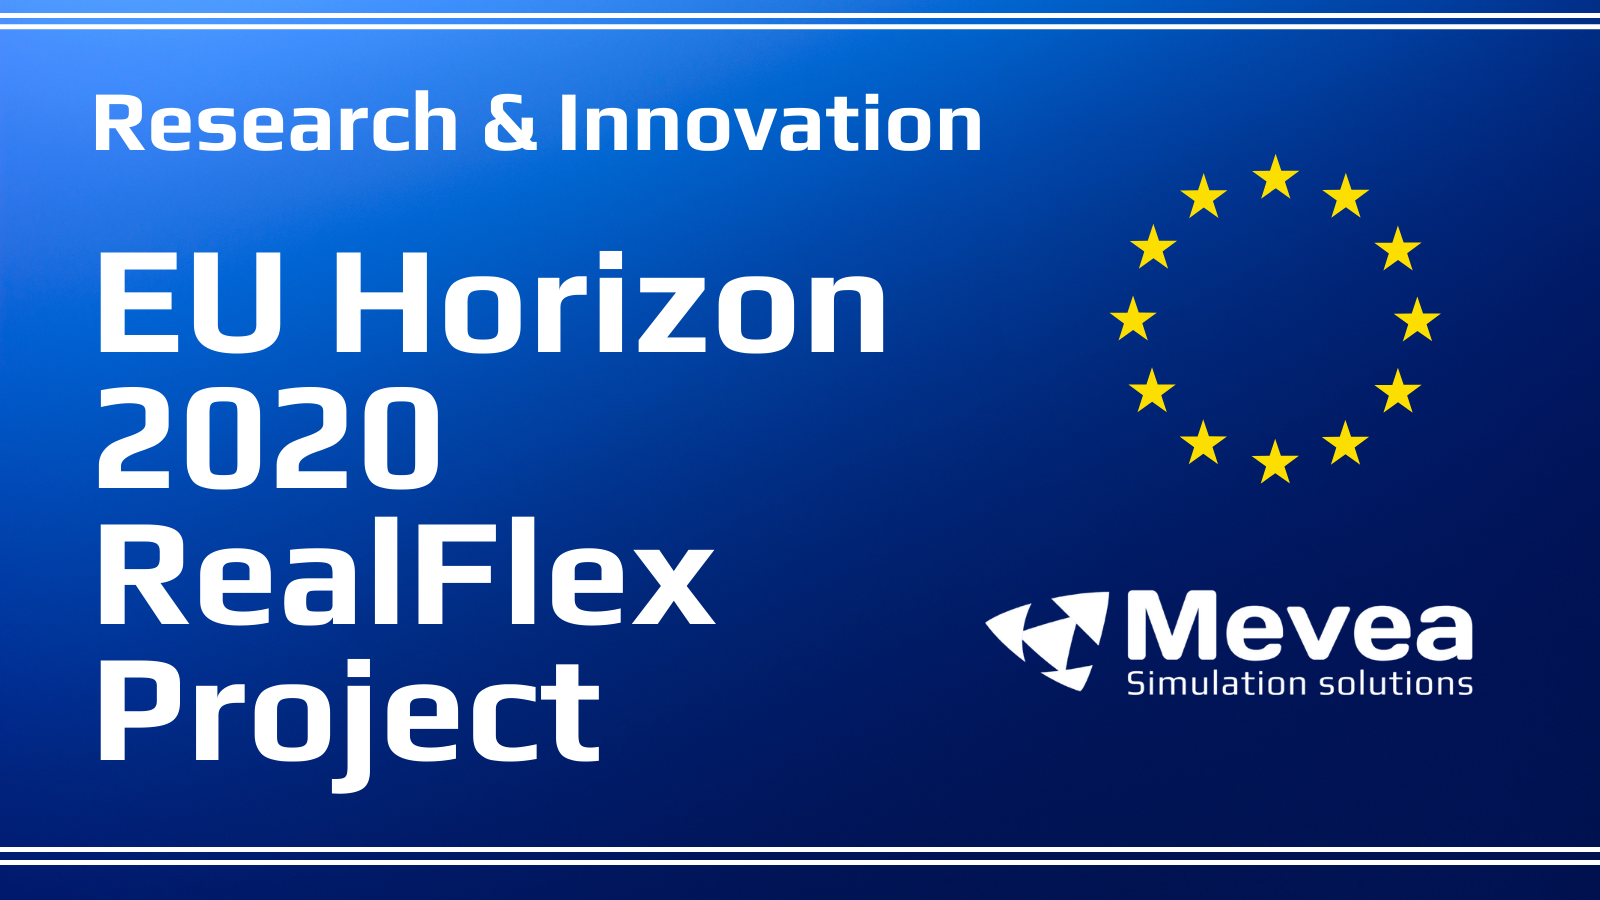 Mevea has implemented the EU Horizon 2020 Project